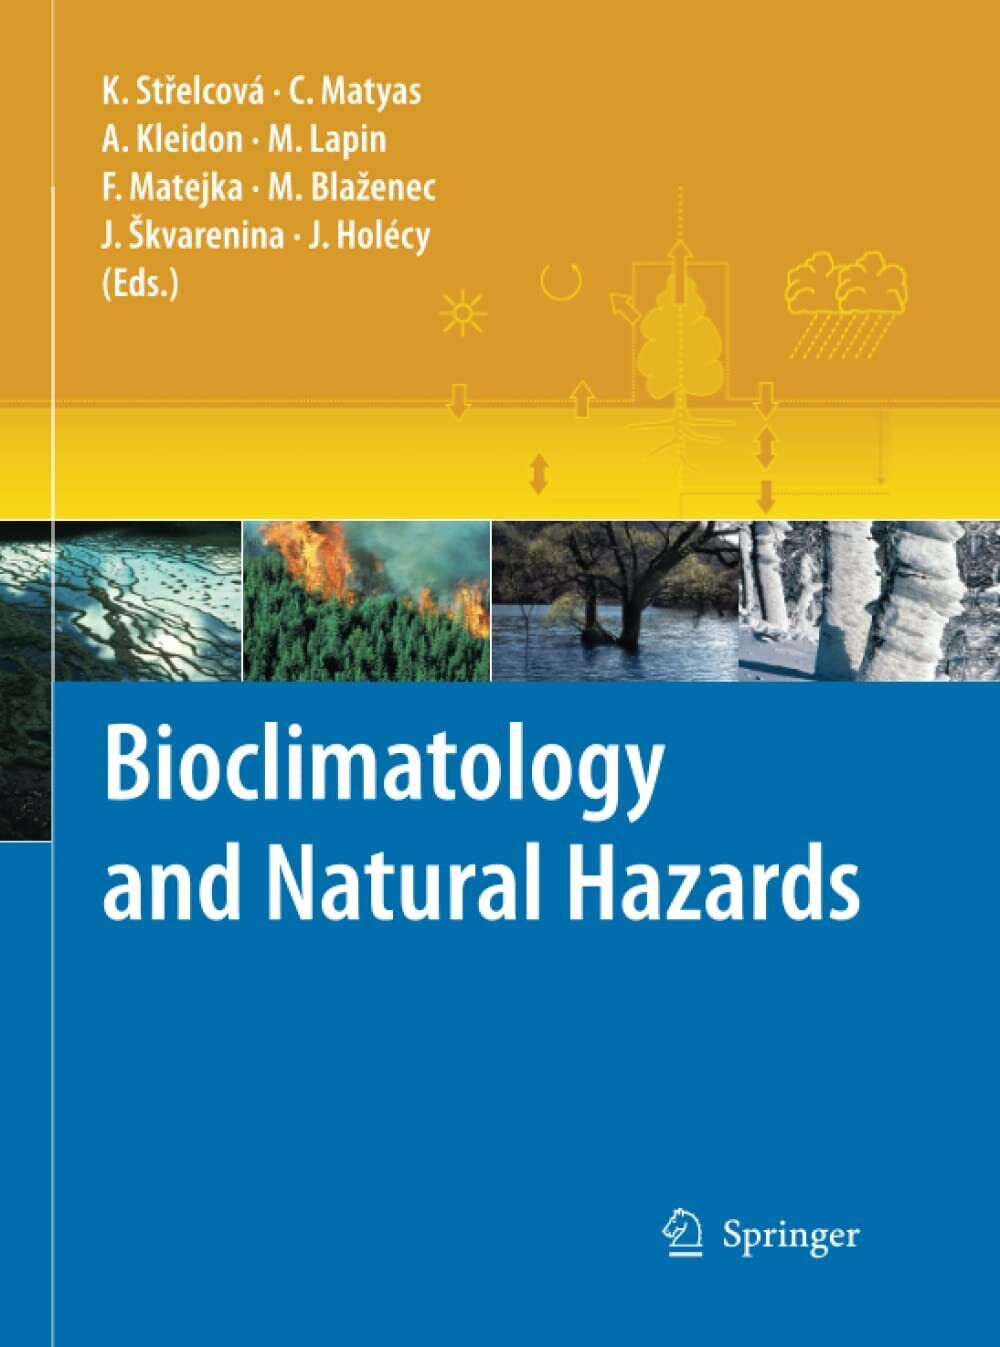 Bioclimatology and Natural Hazards - Katar?na Strelcov? - Springer, 2010